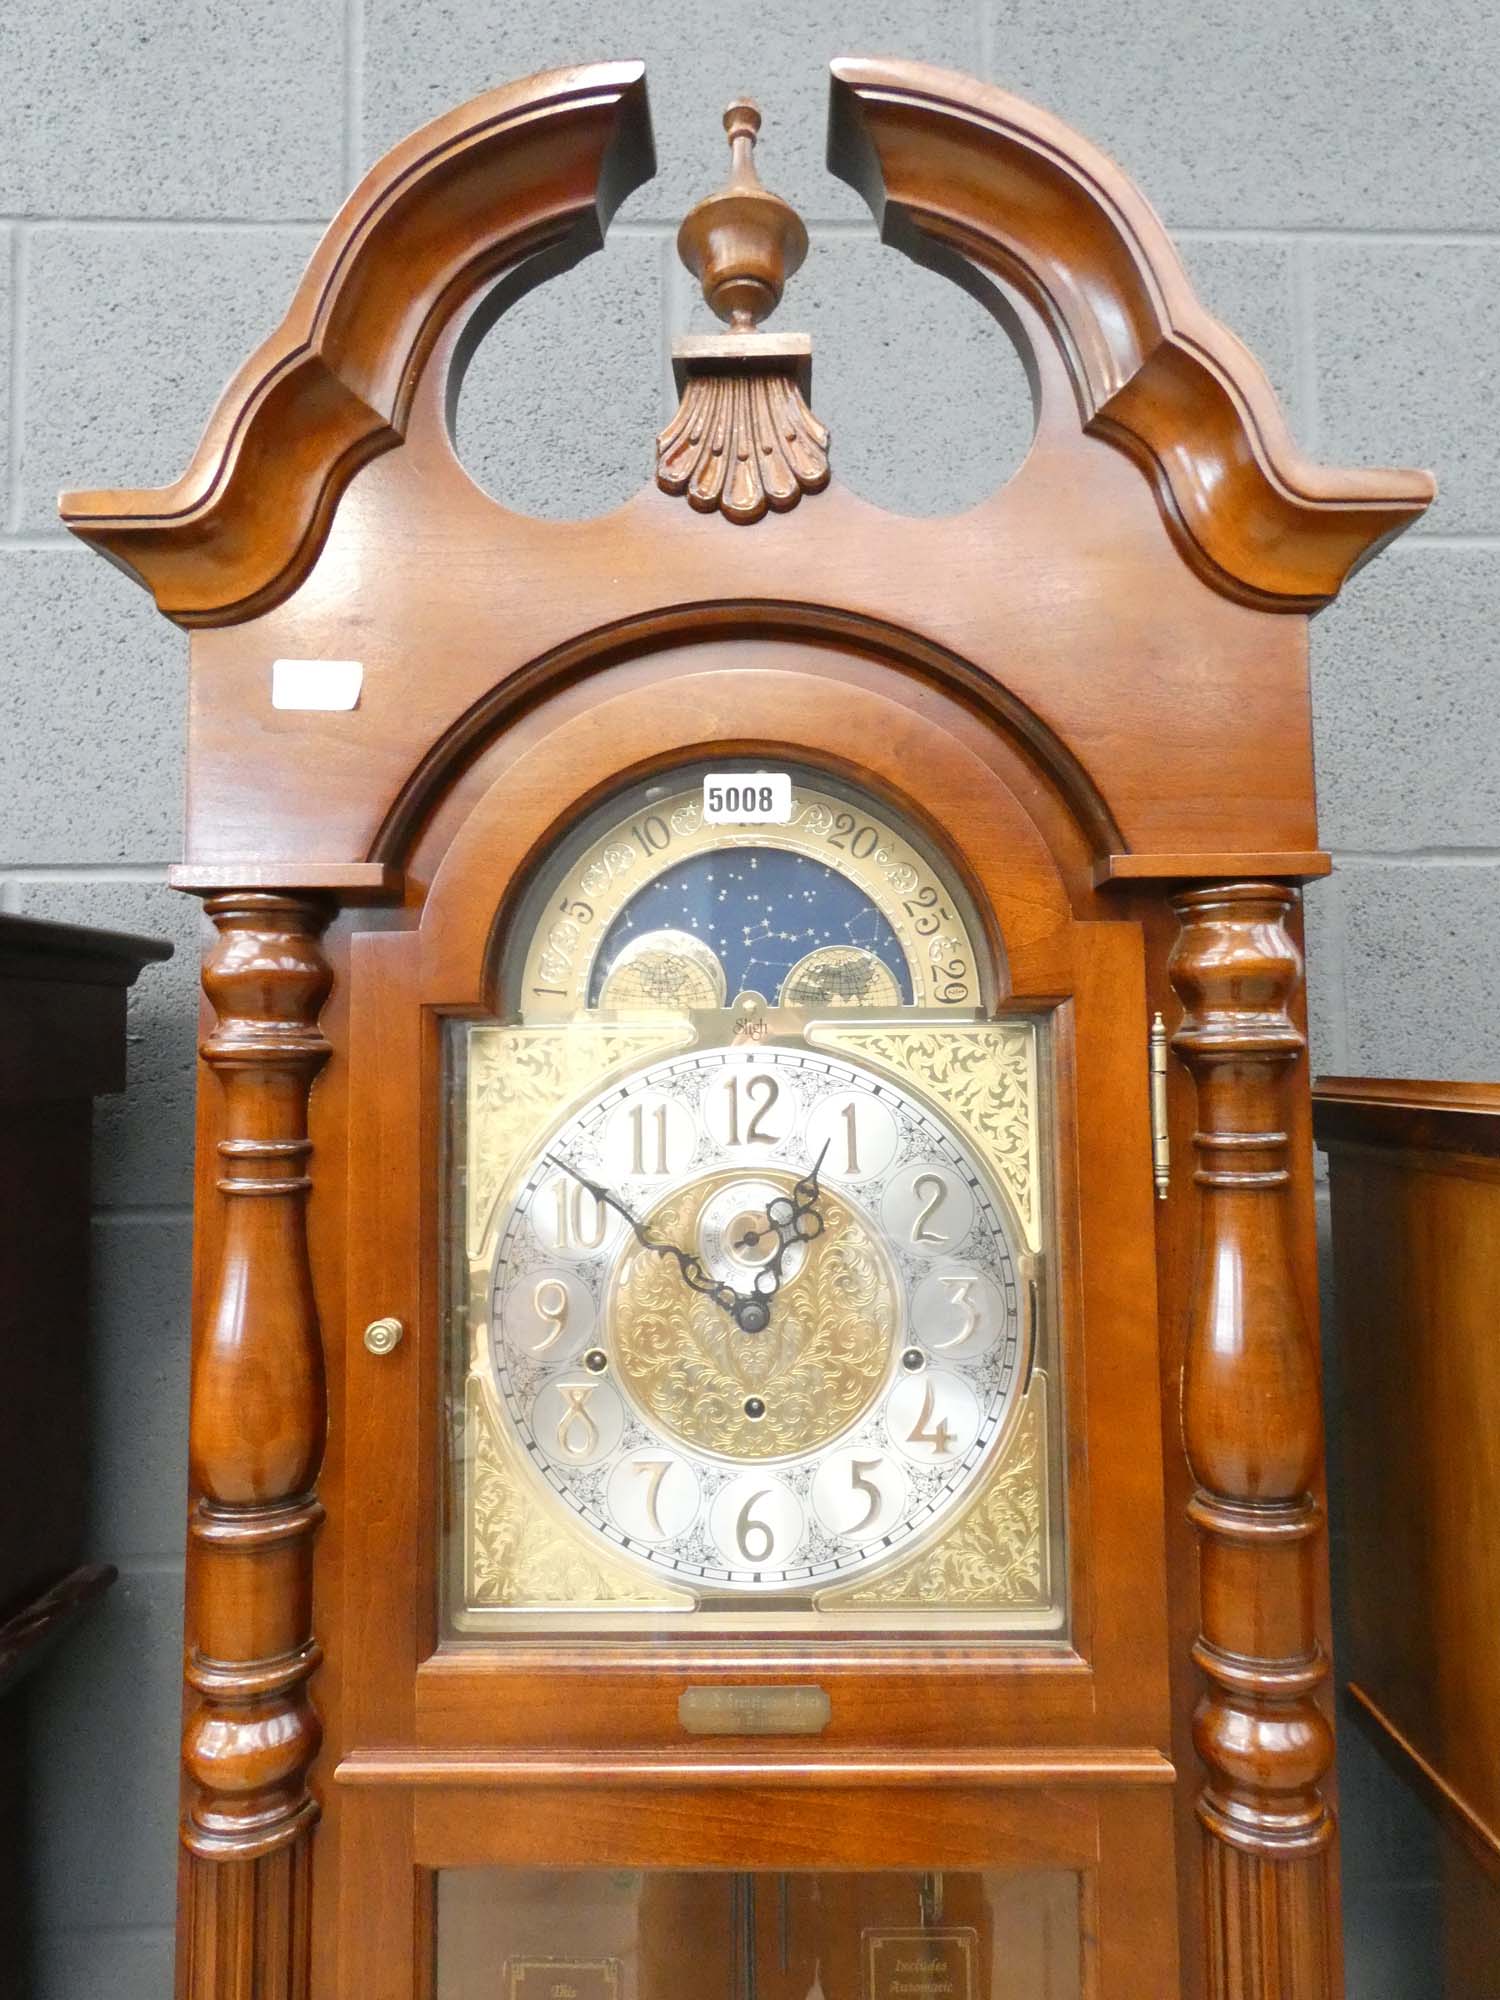 Modern Grandfather clock in dark wood, signed Sligh - Image 2 of 2